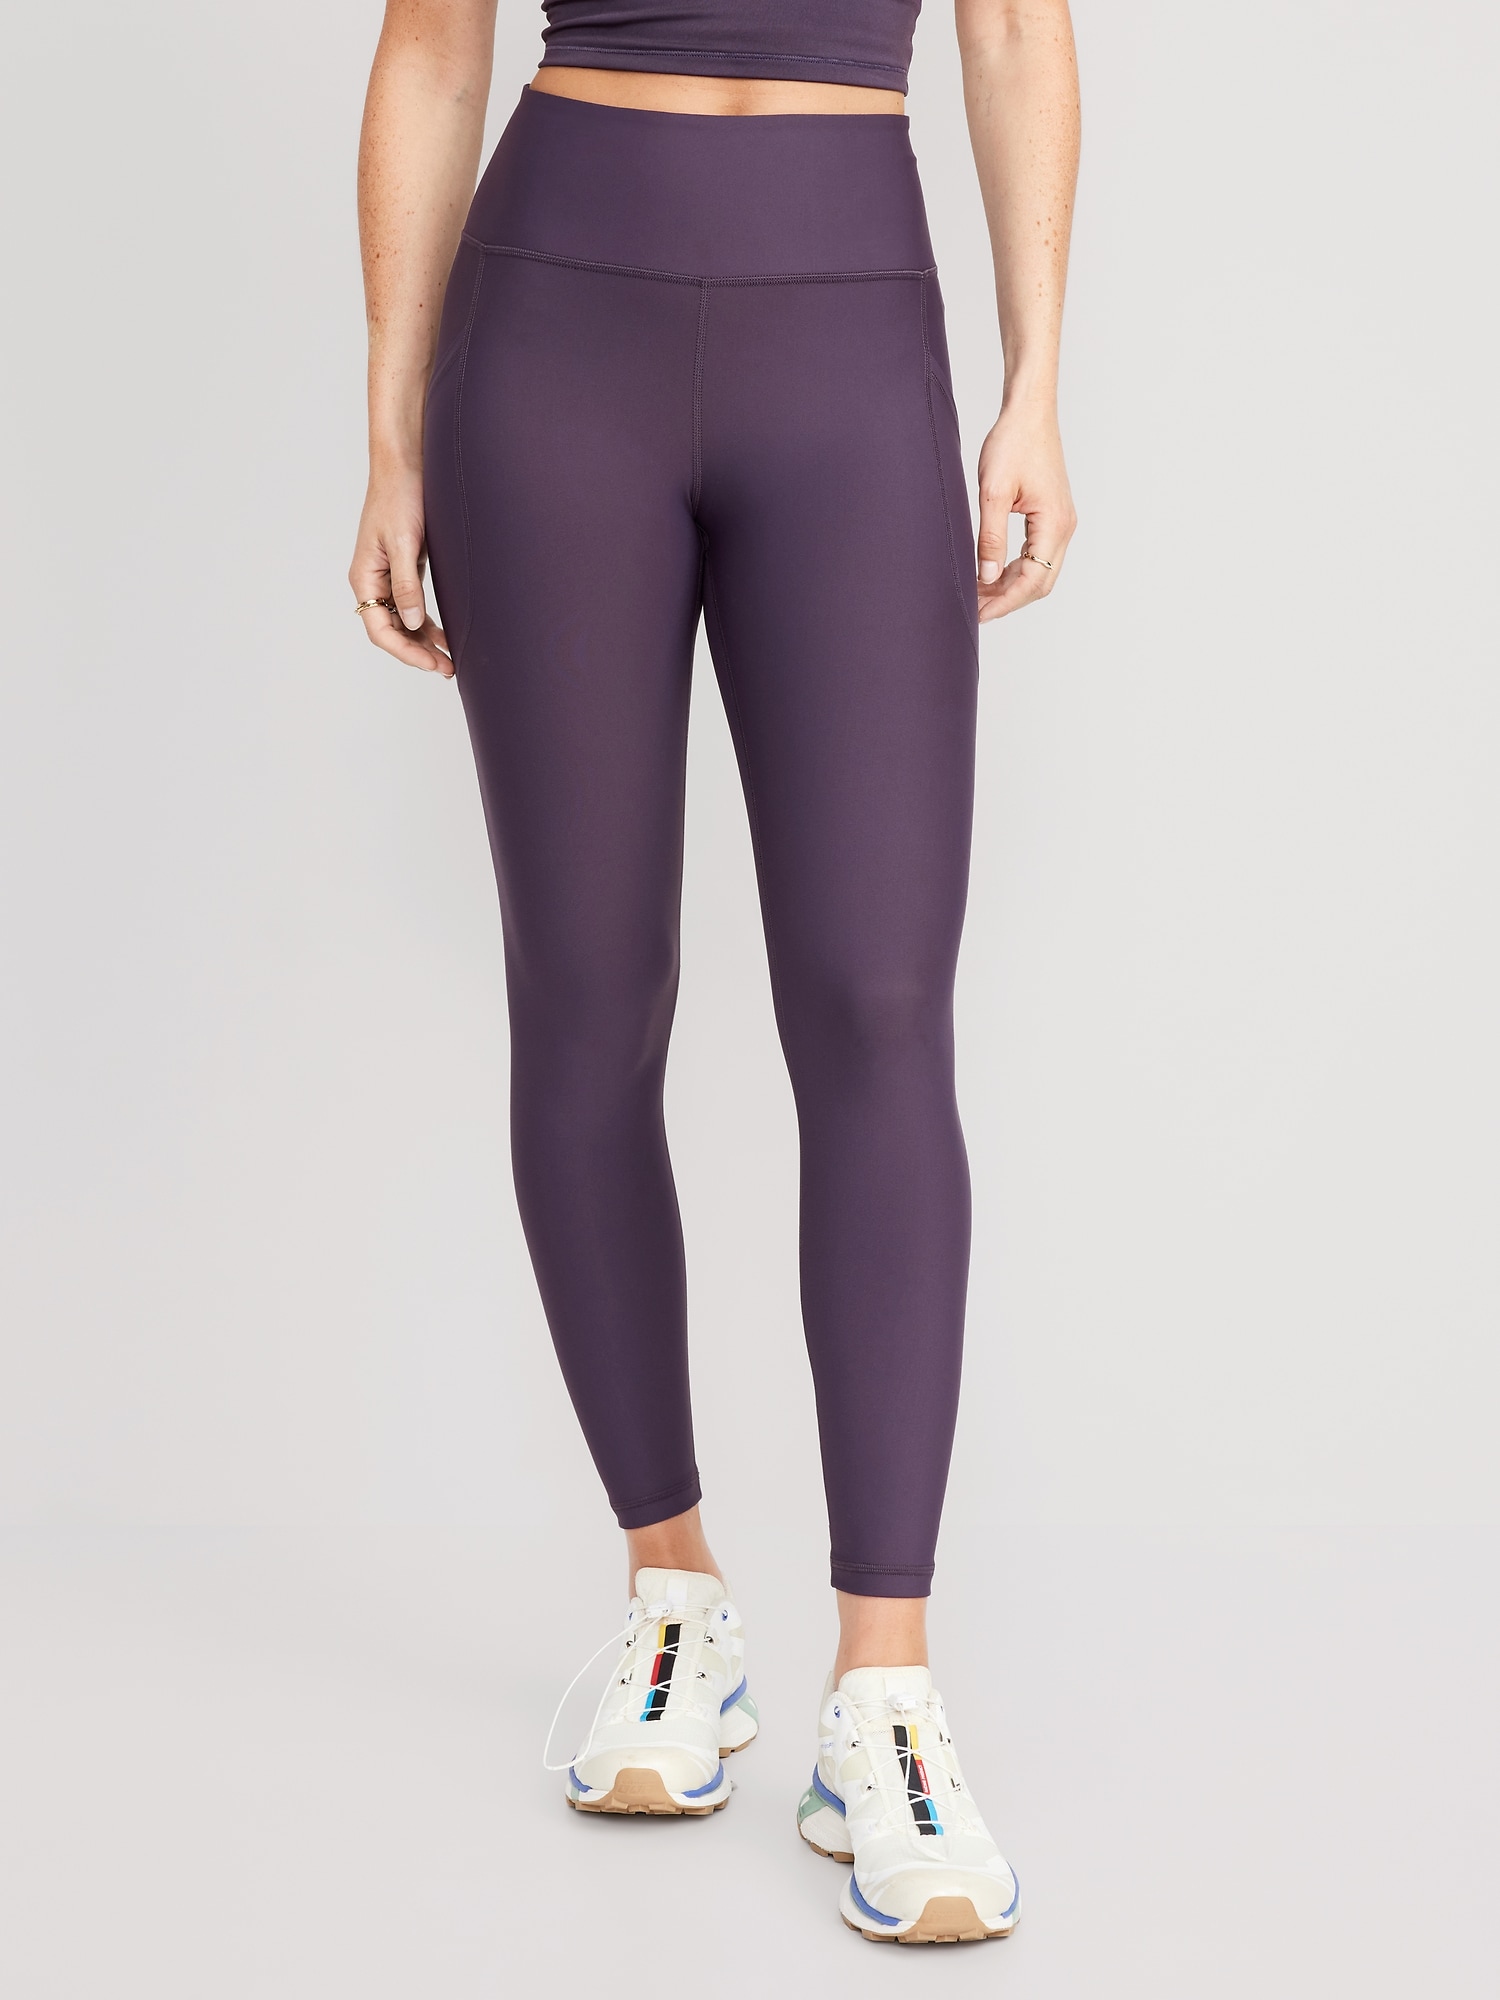 Dri-fit leggings in leopard print with high waist, light purple, Nike